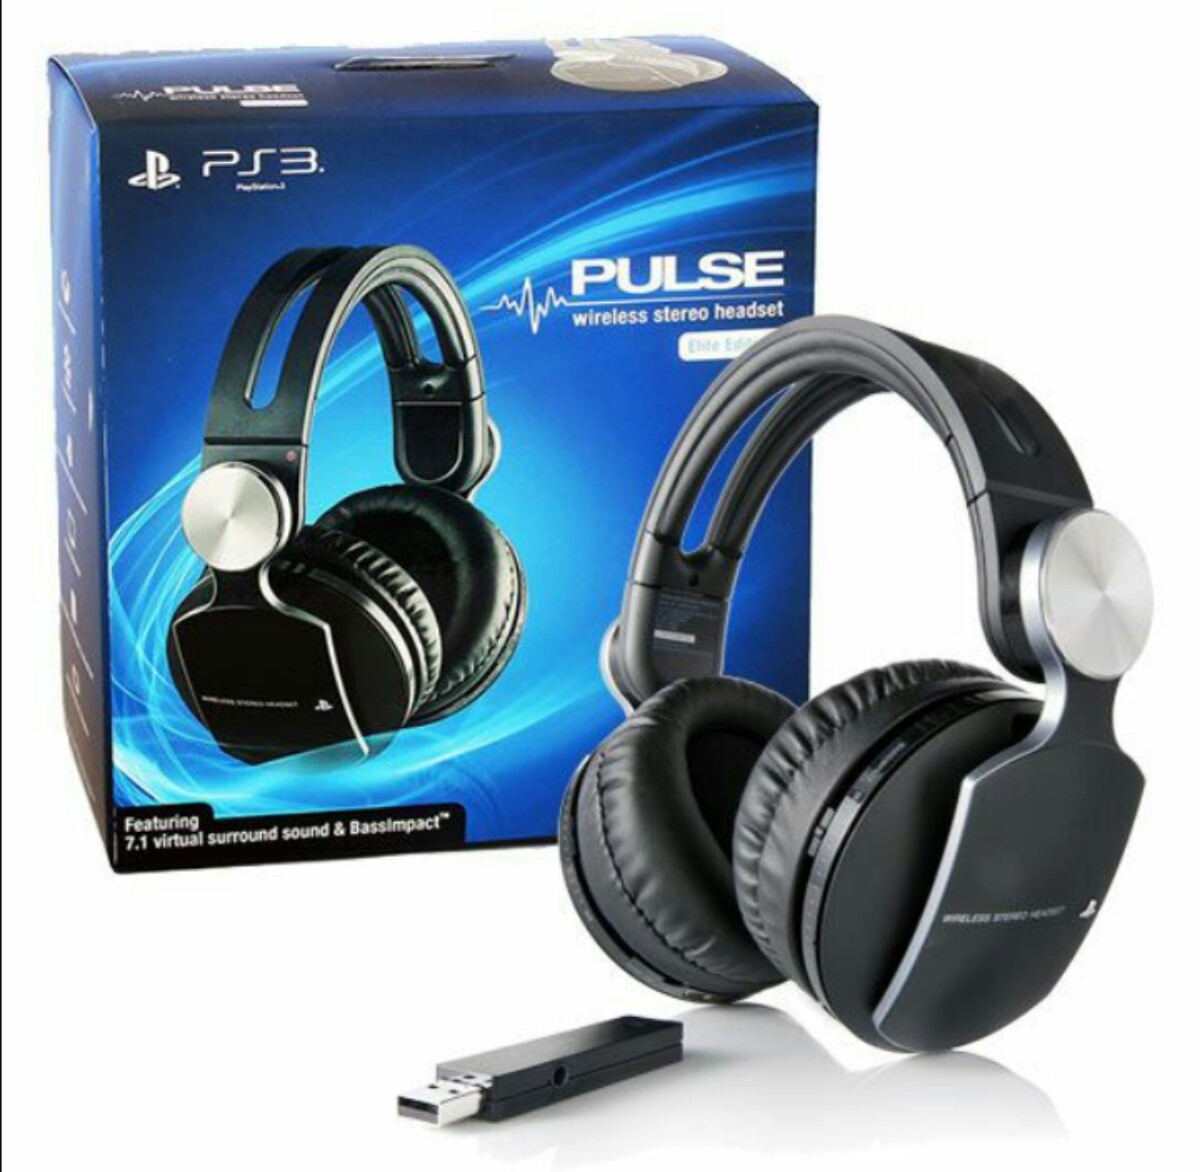 Playstation pulse elite